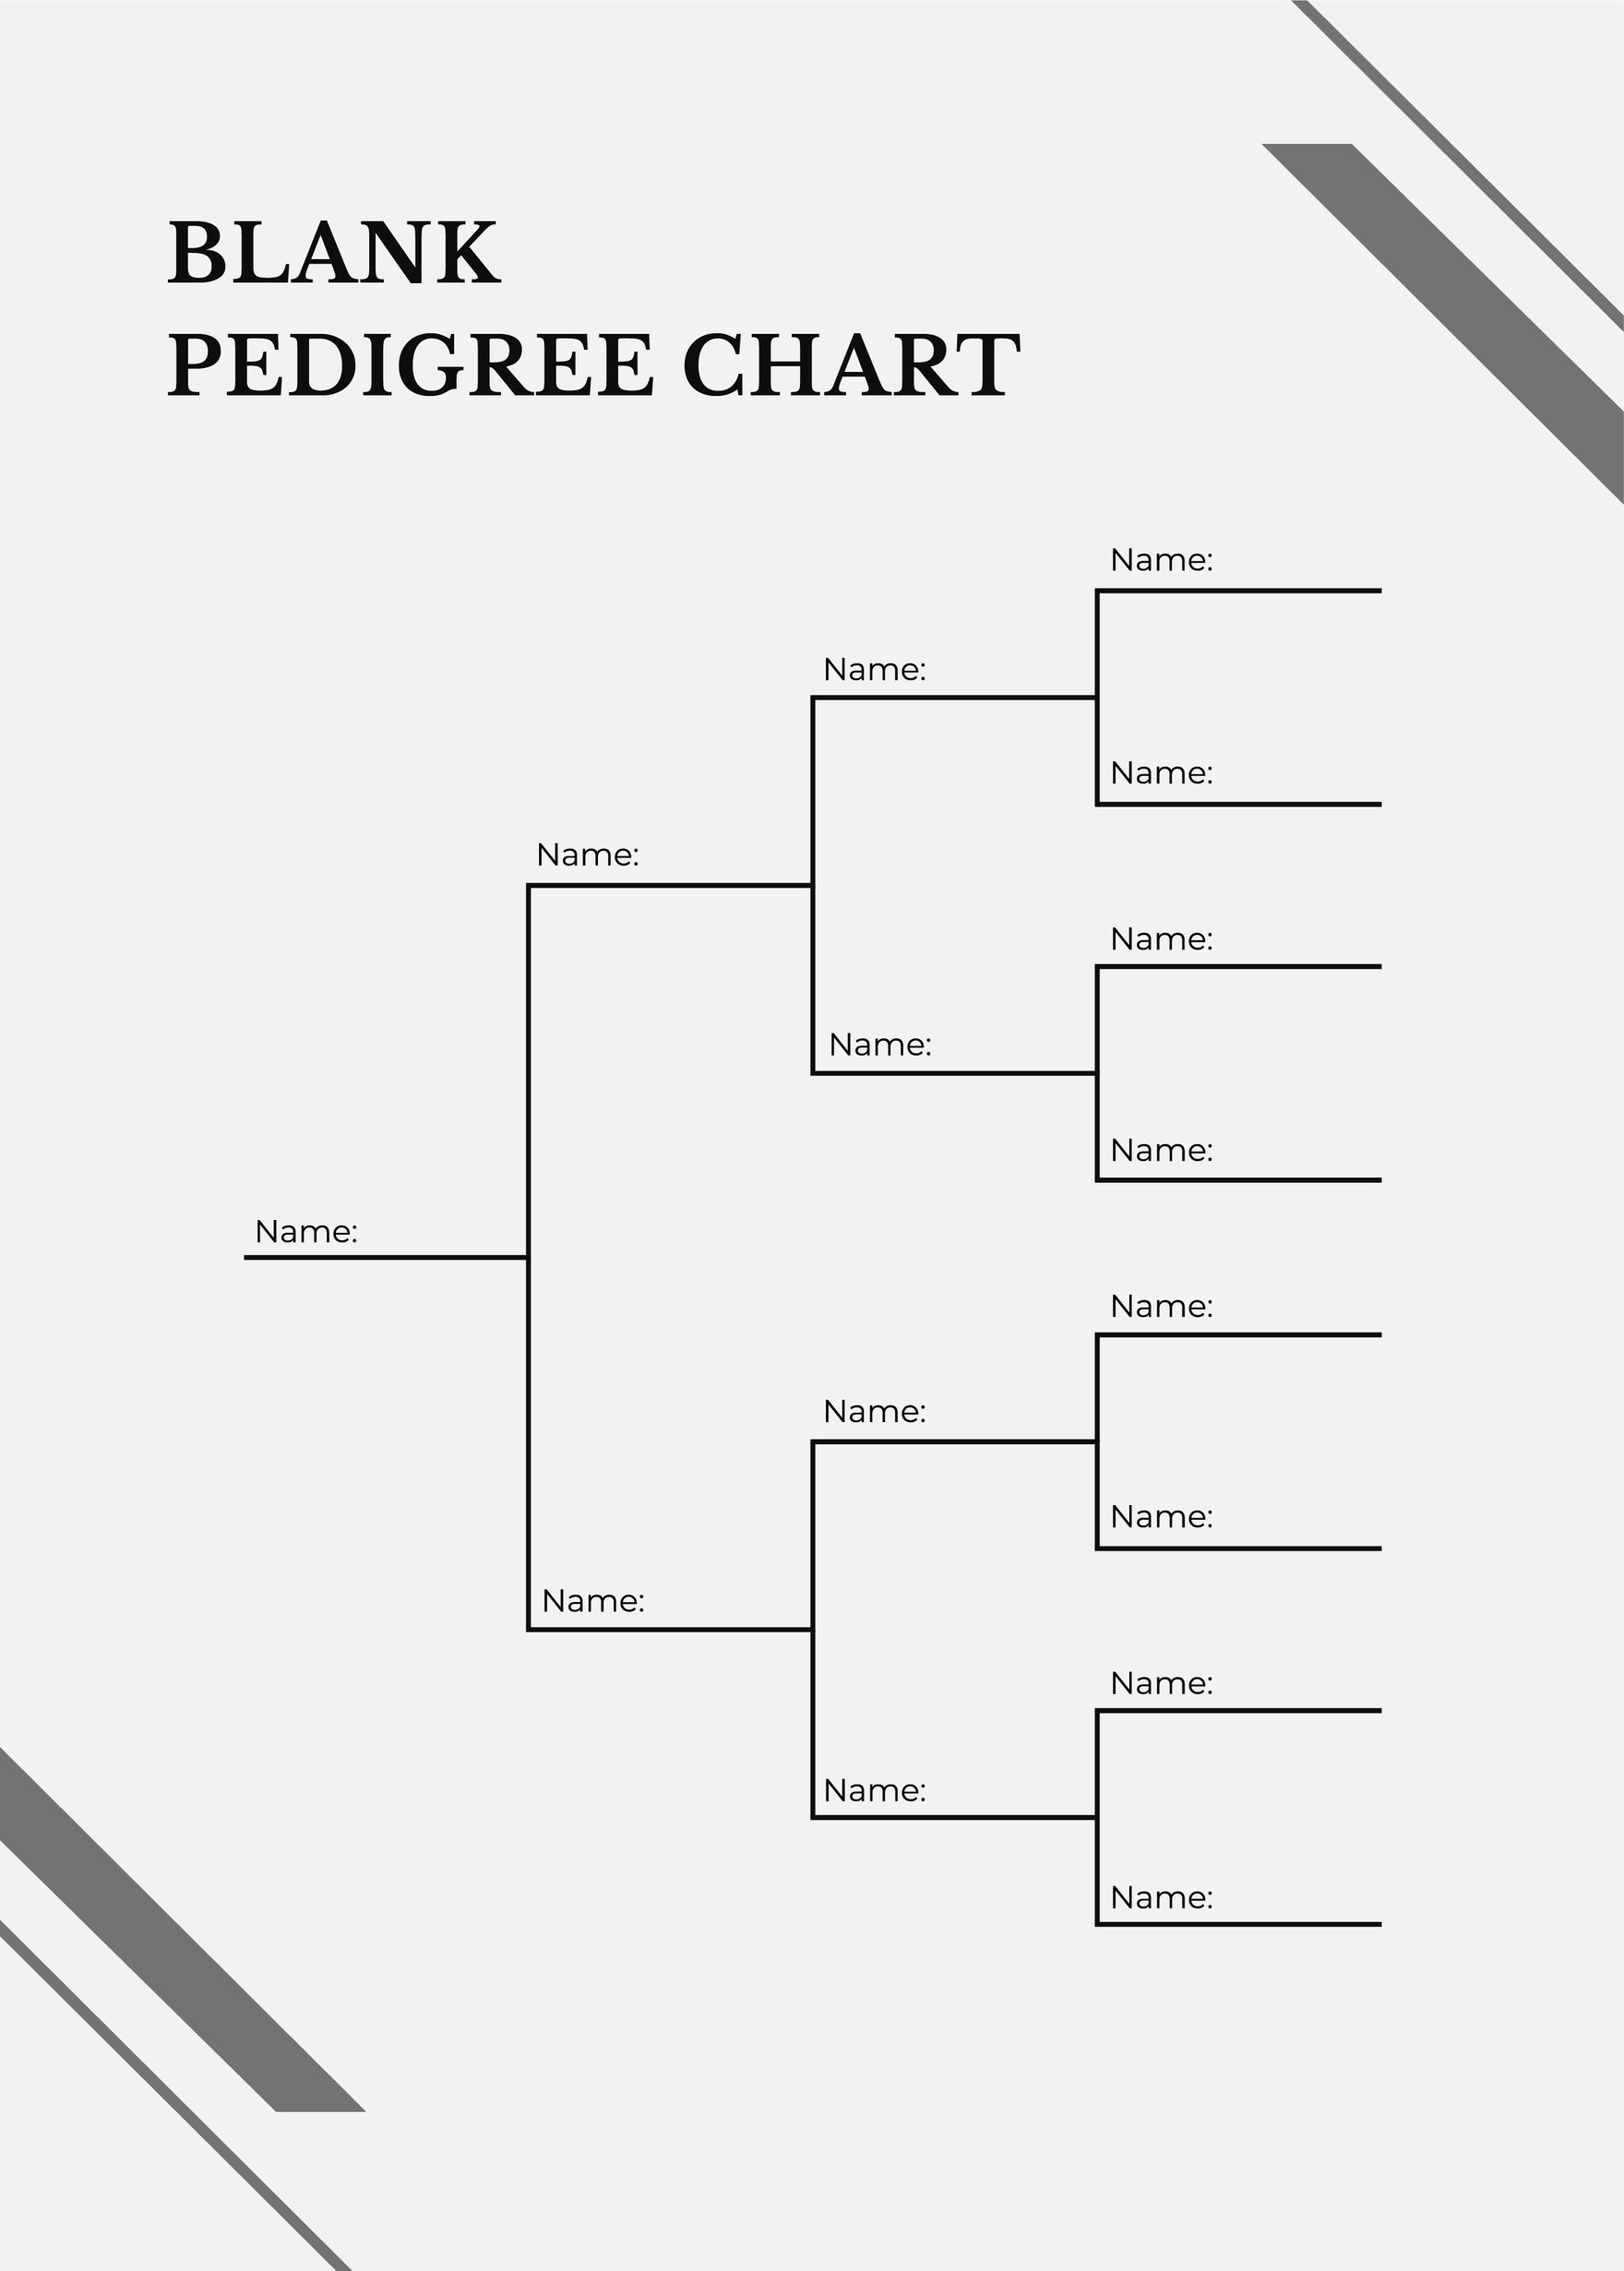 Free Blank Pedigree Chart Download in PDF, Illustrator